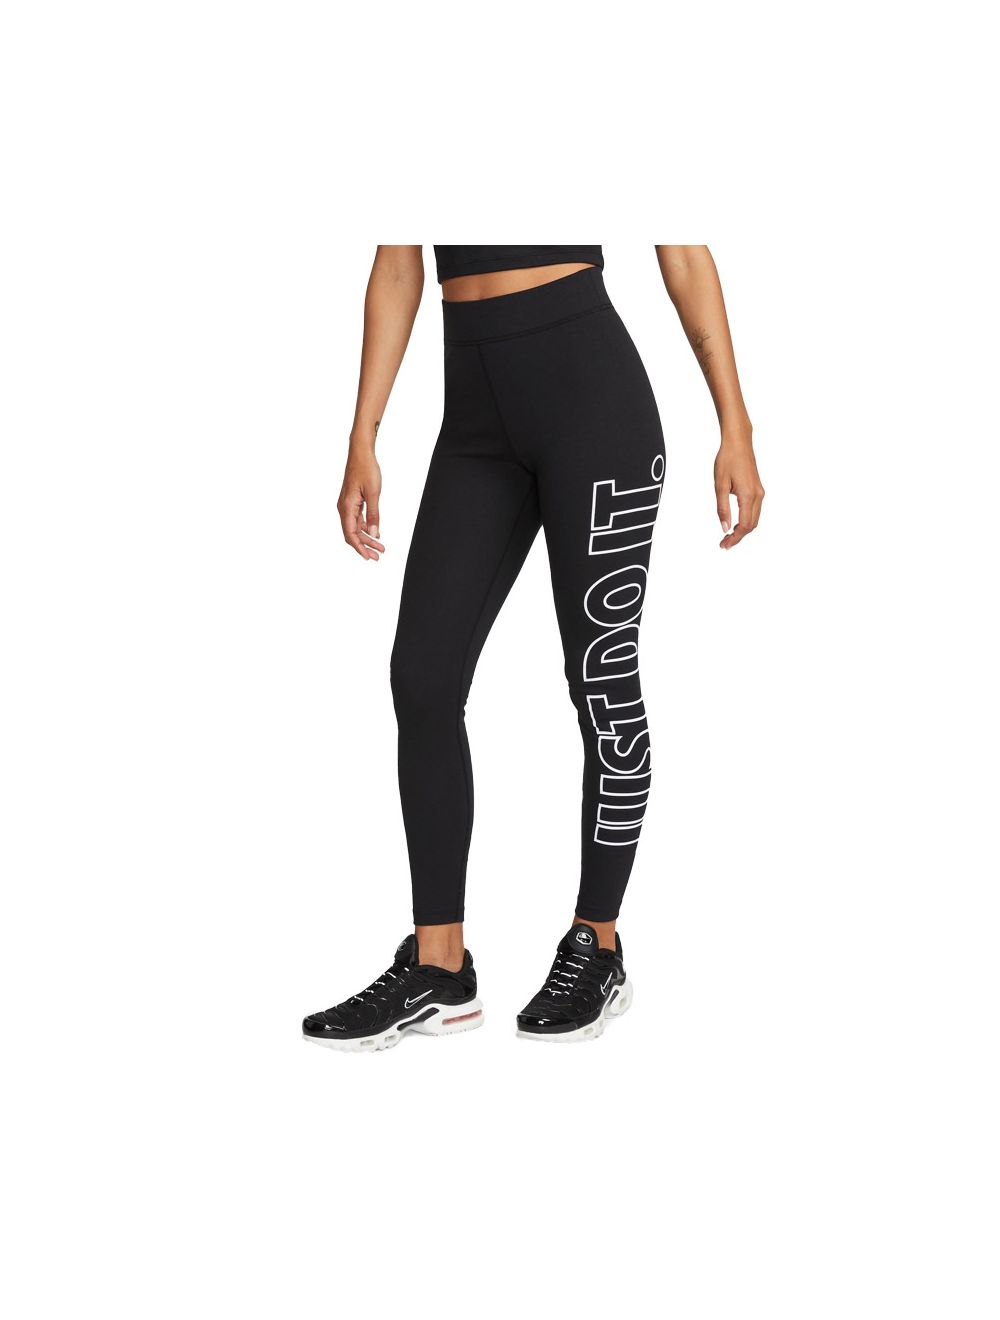 Nike Women's NSW Varsity Tights / Leggings - Black